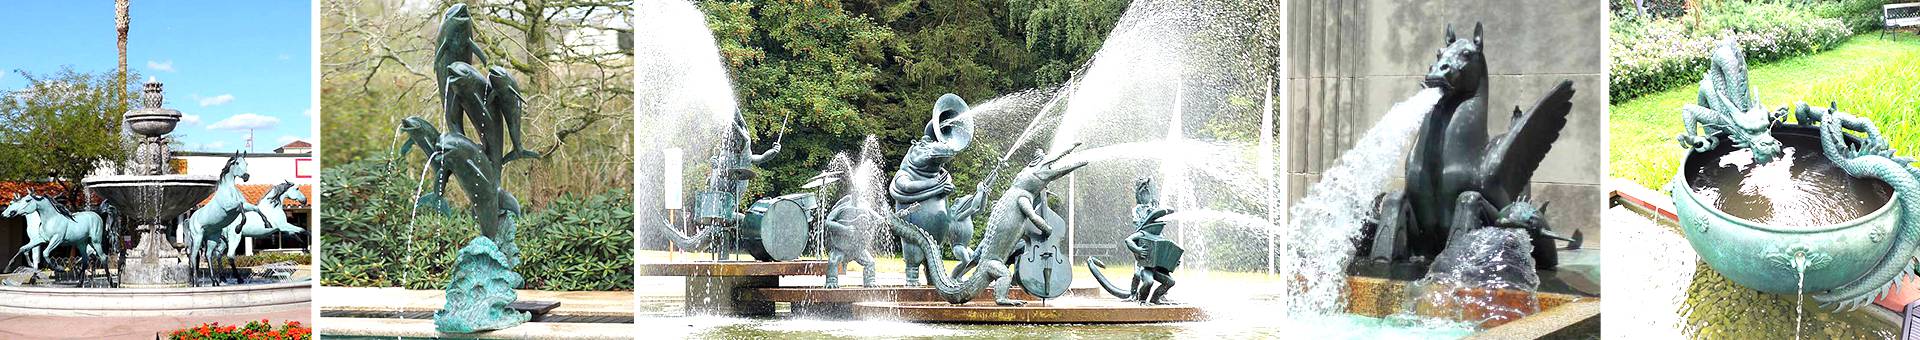 Animal Fountain